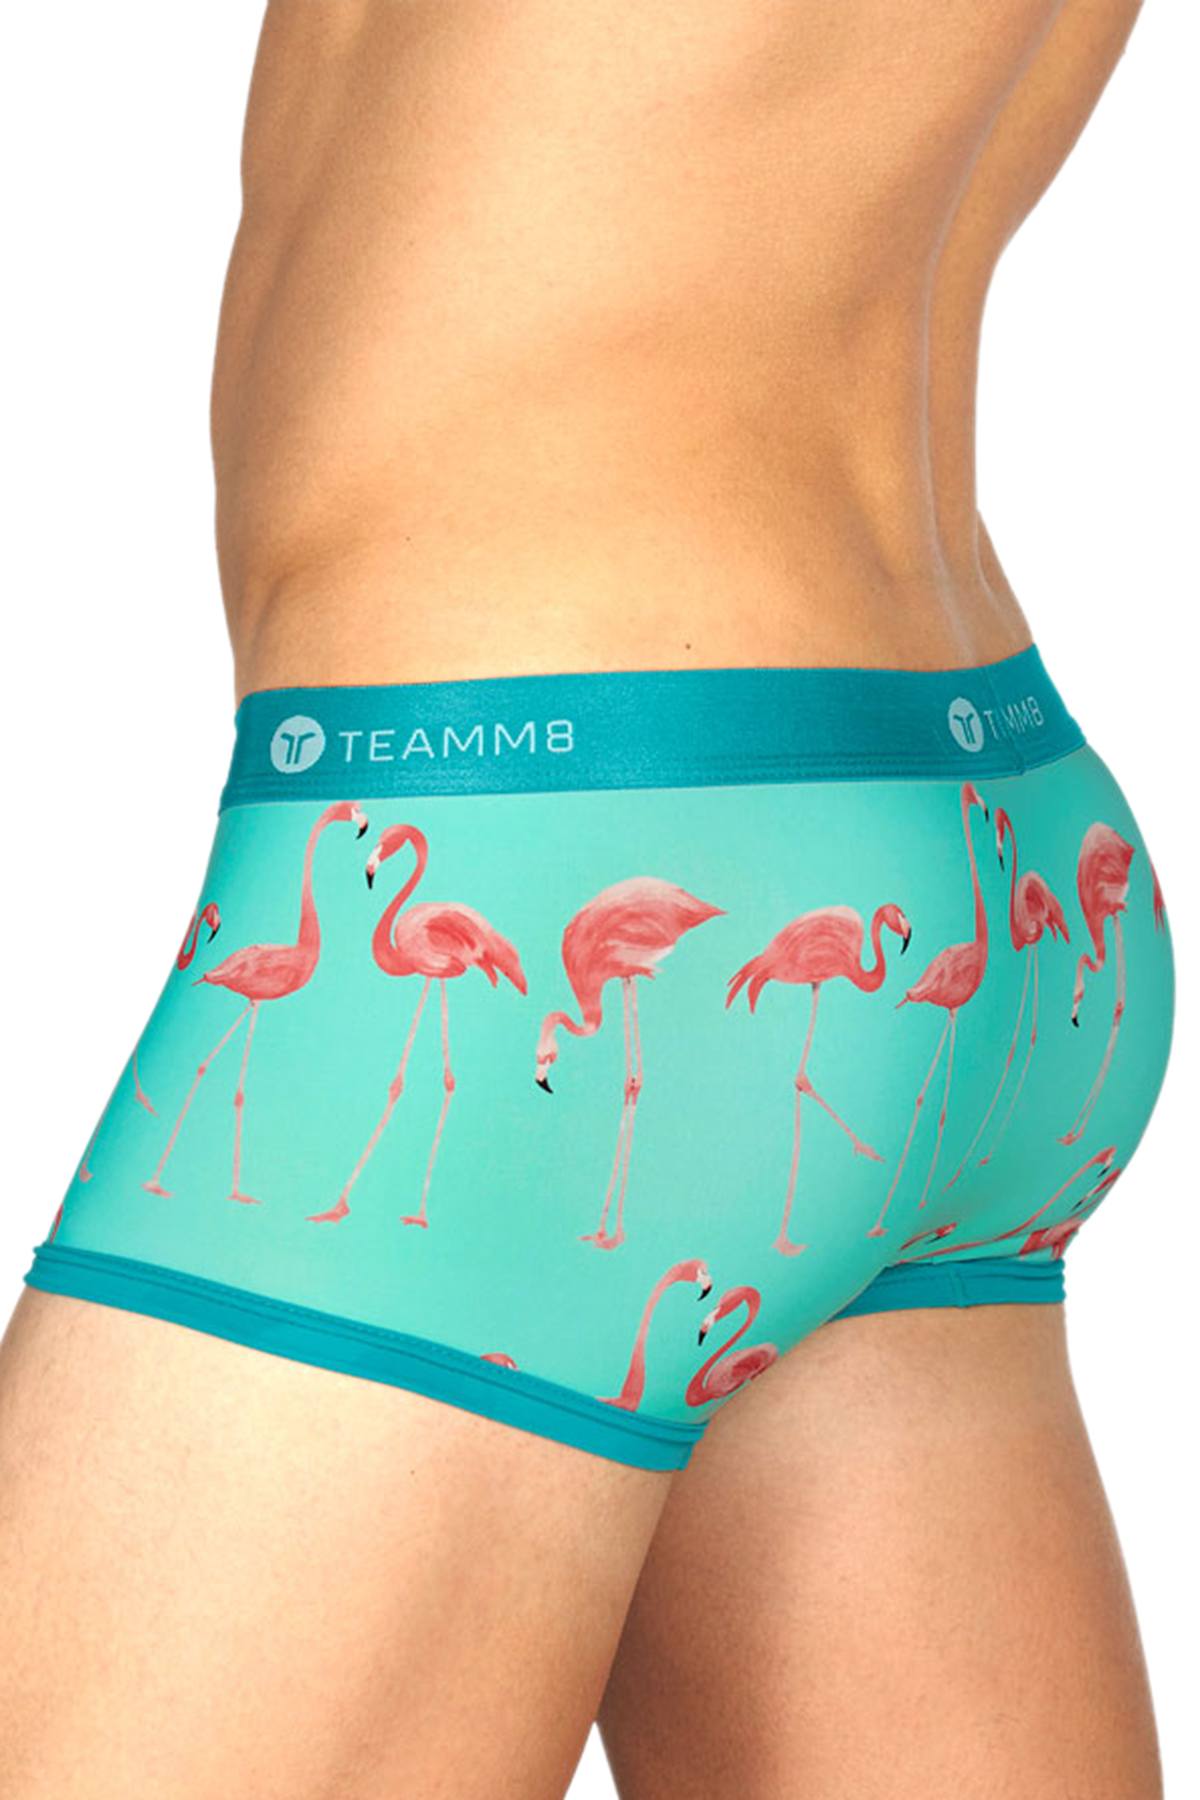 Teamm8 Green Flamingo Trunk